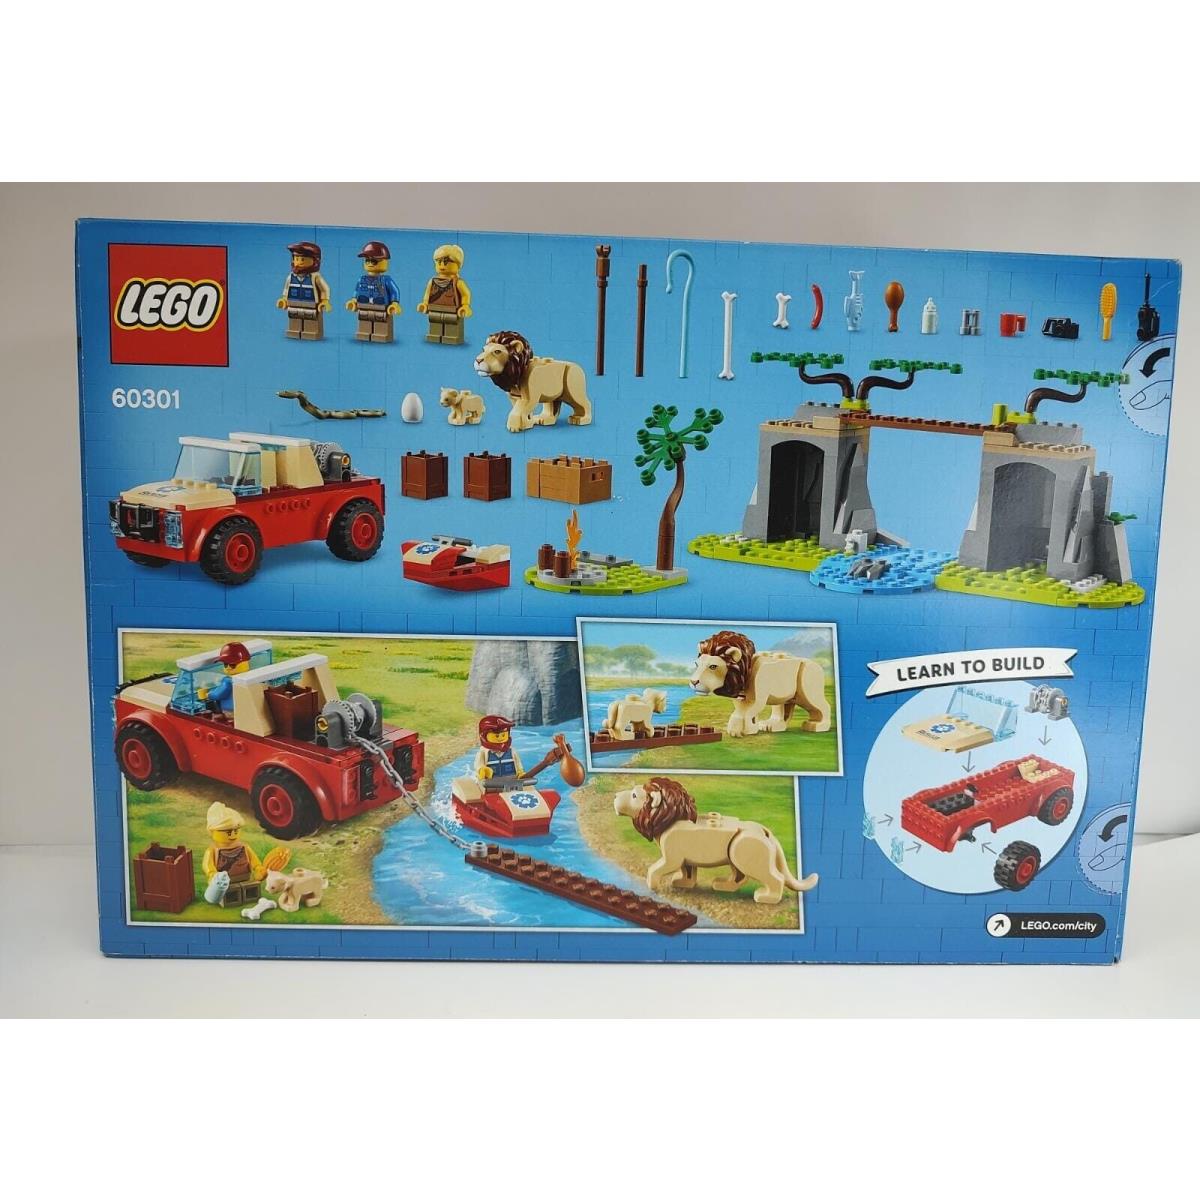 Lego 60301 City Wildlife Rescue Off Roader Vehicle Car Toy Building Set